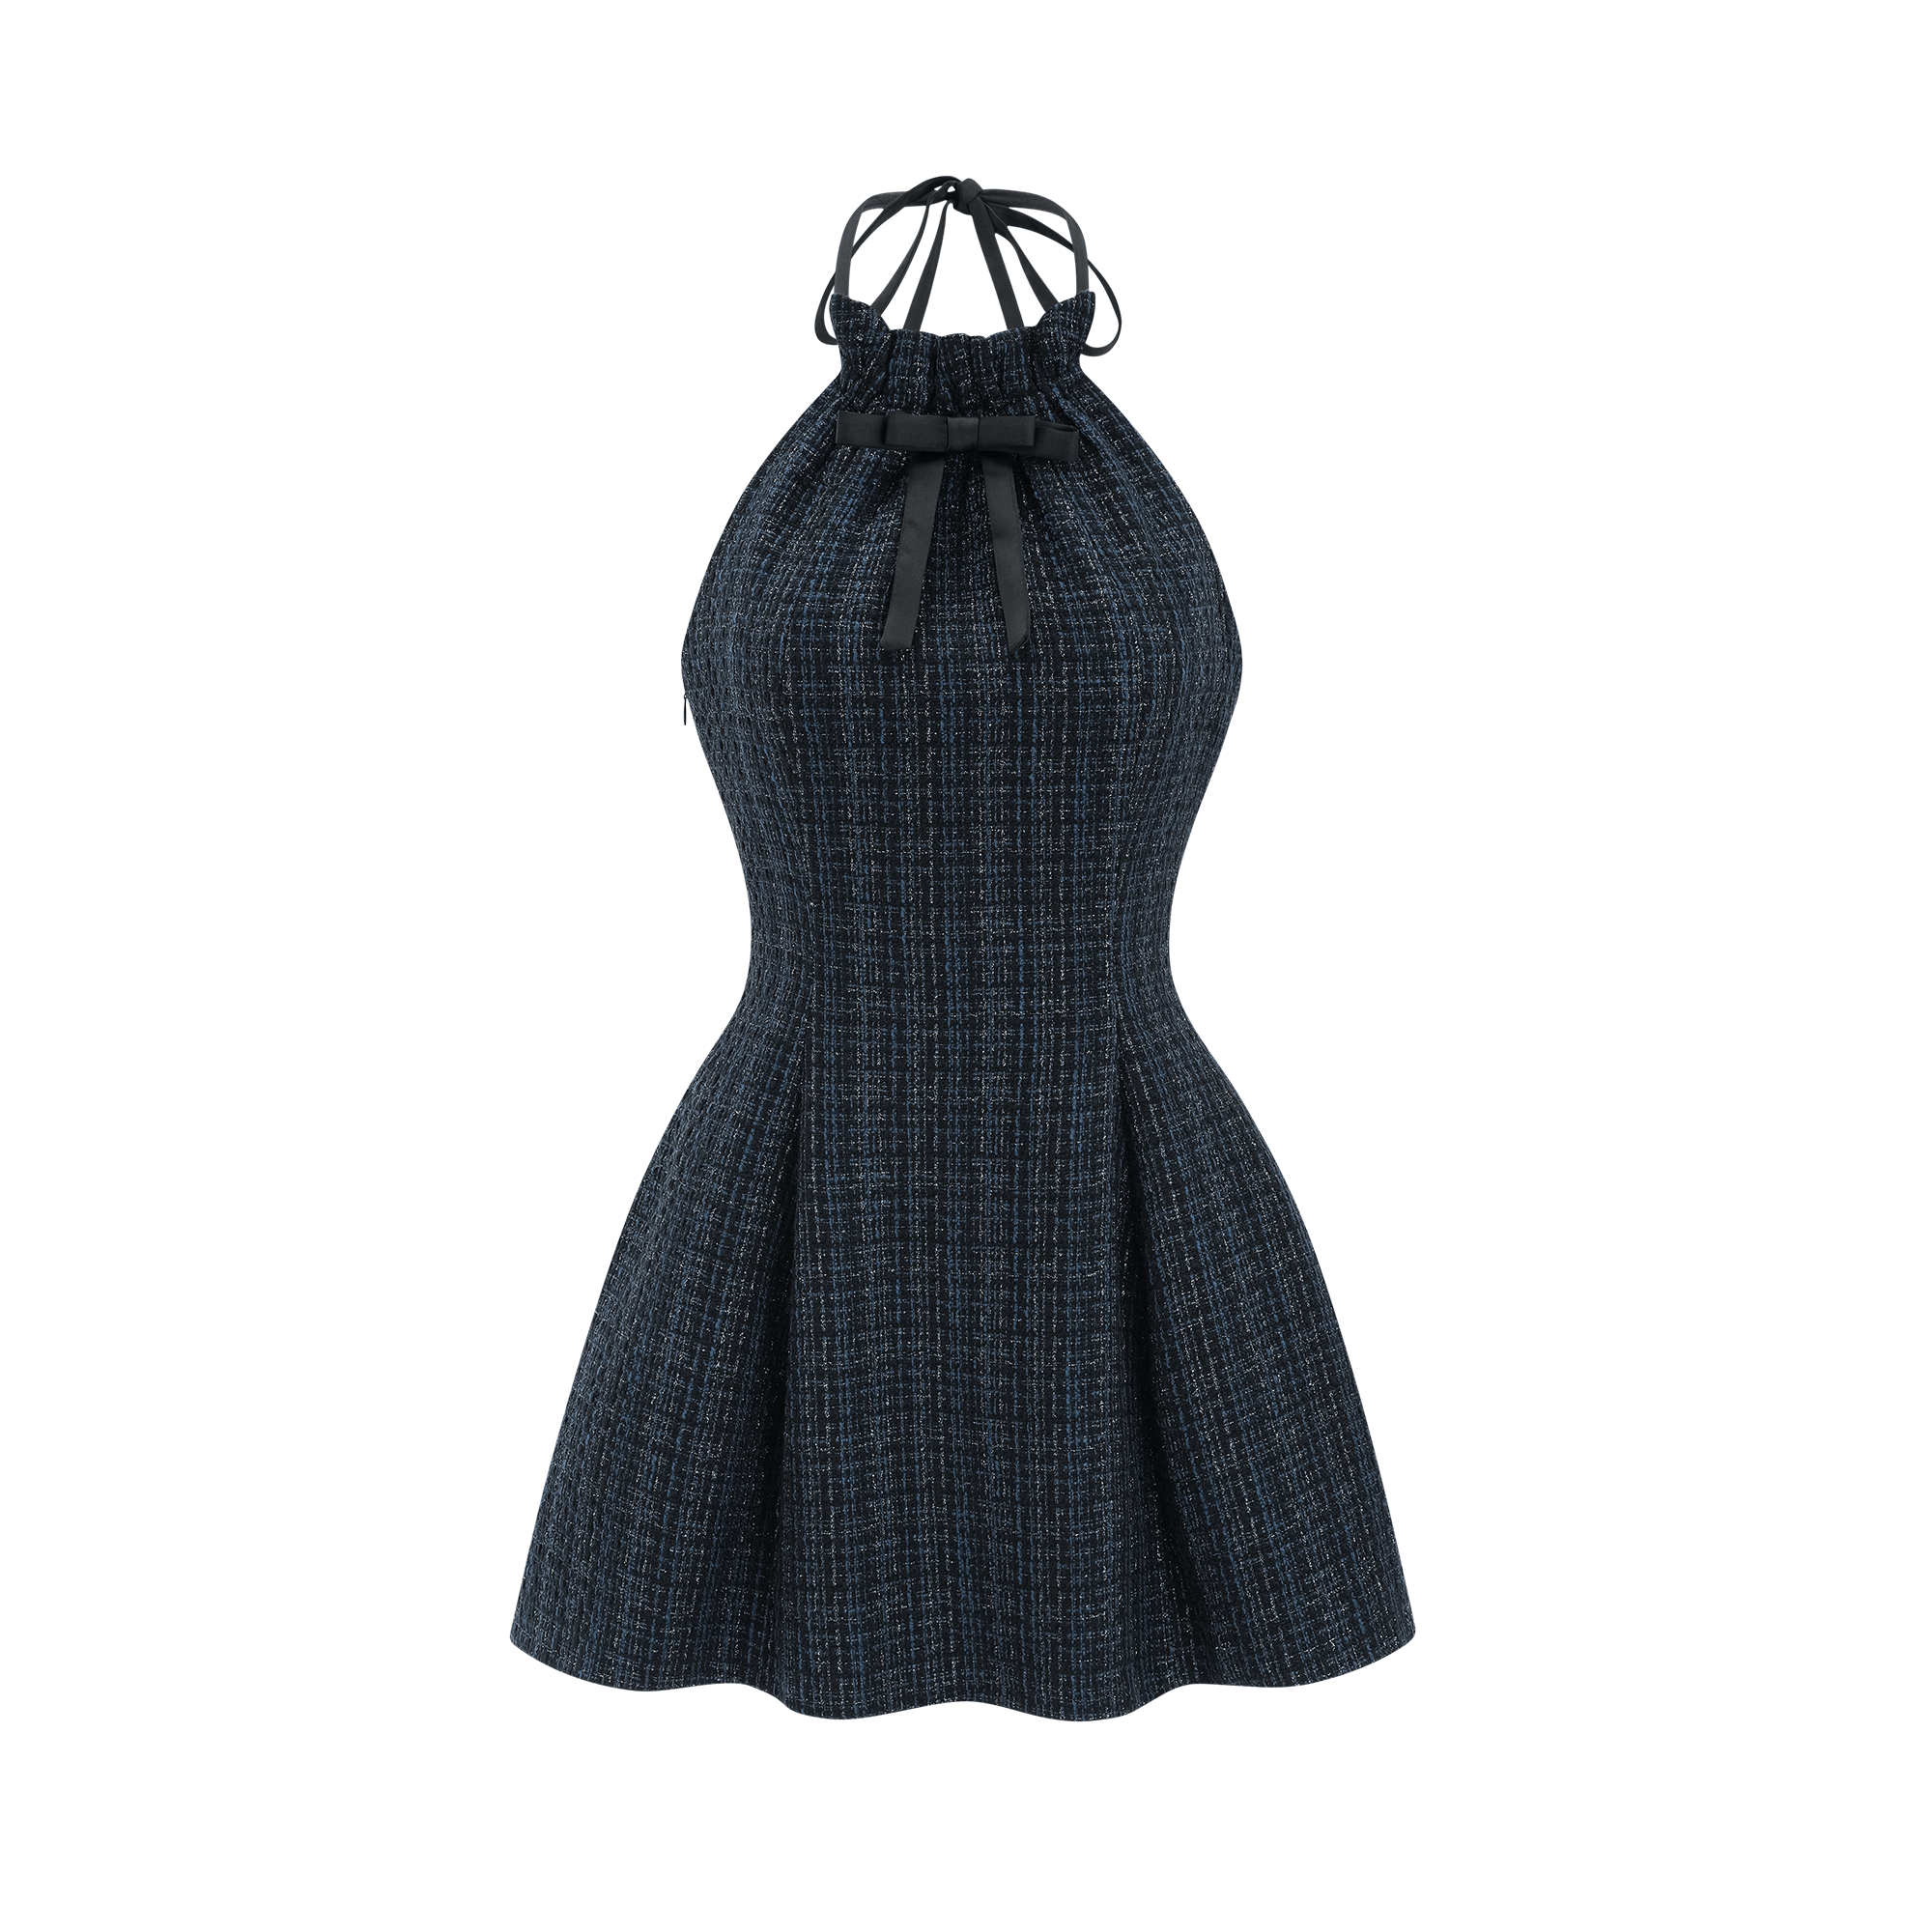 Thumbelina dress - Miss Rosier - Women's Online Boutique